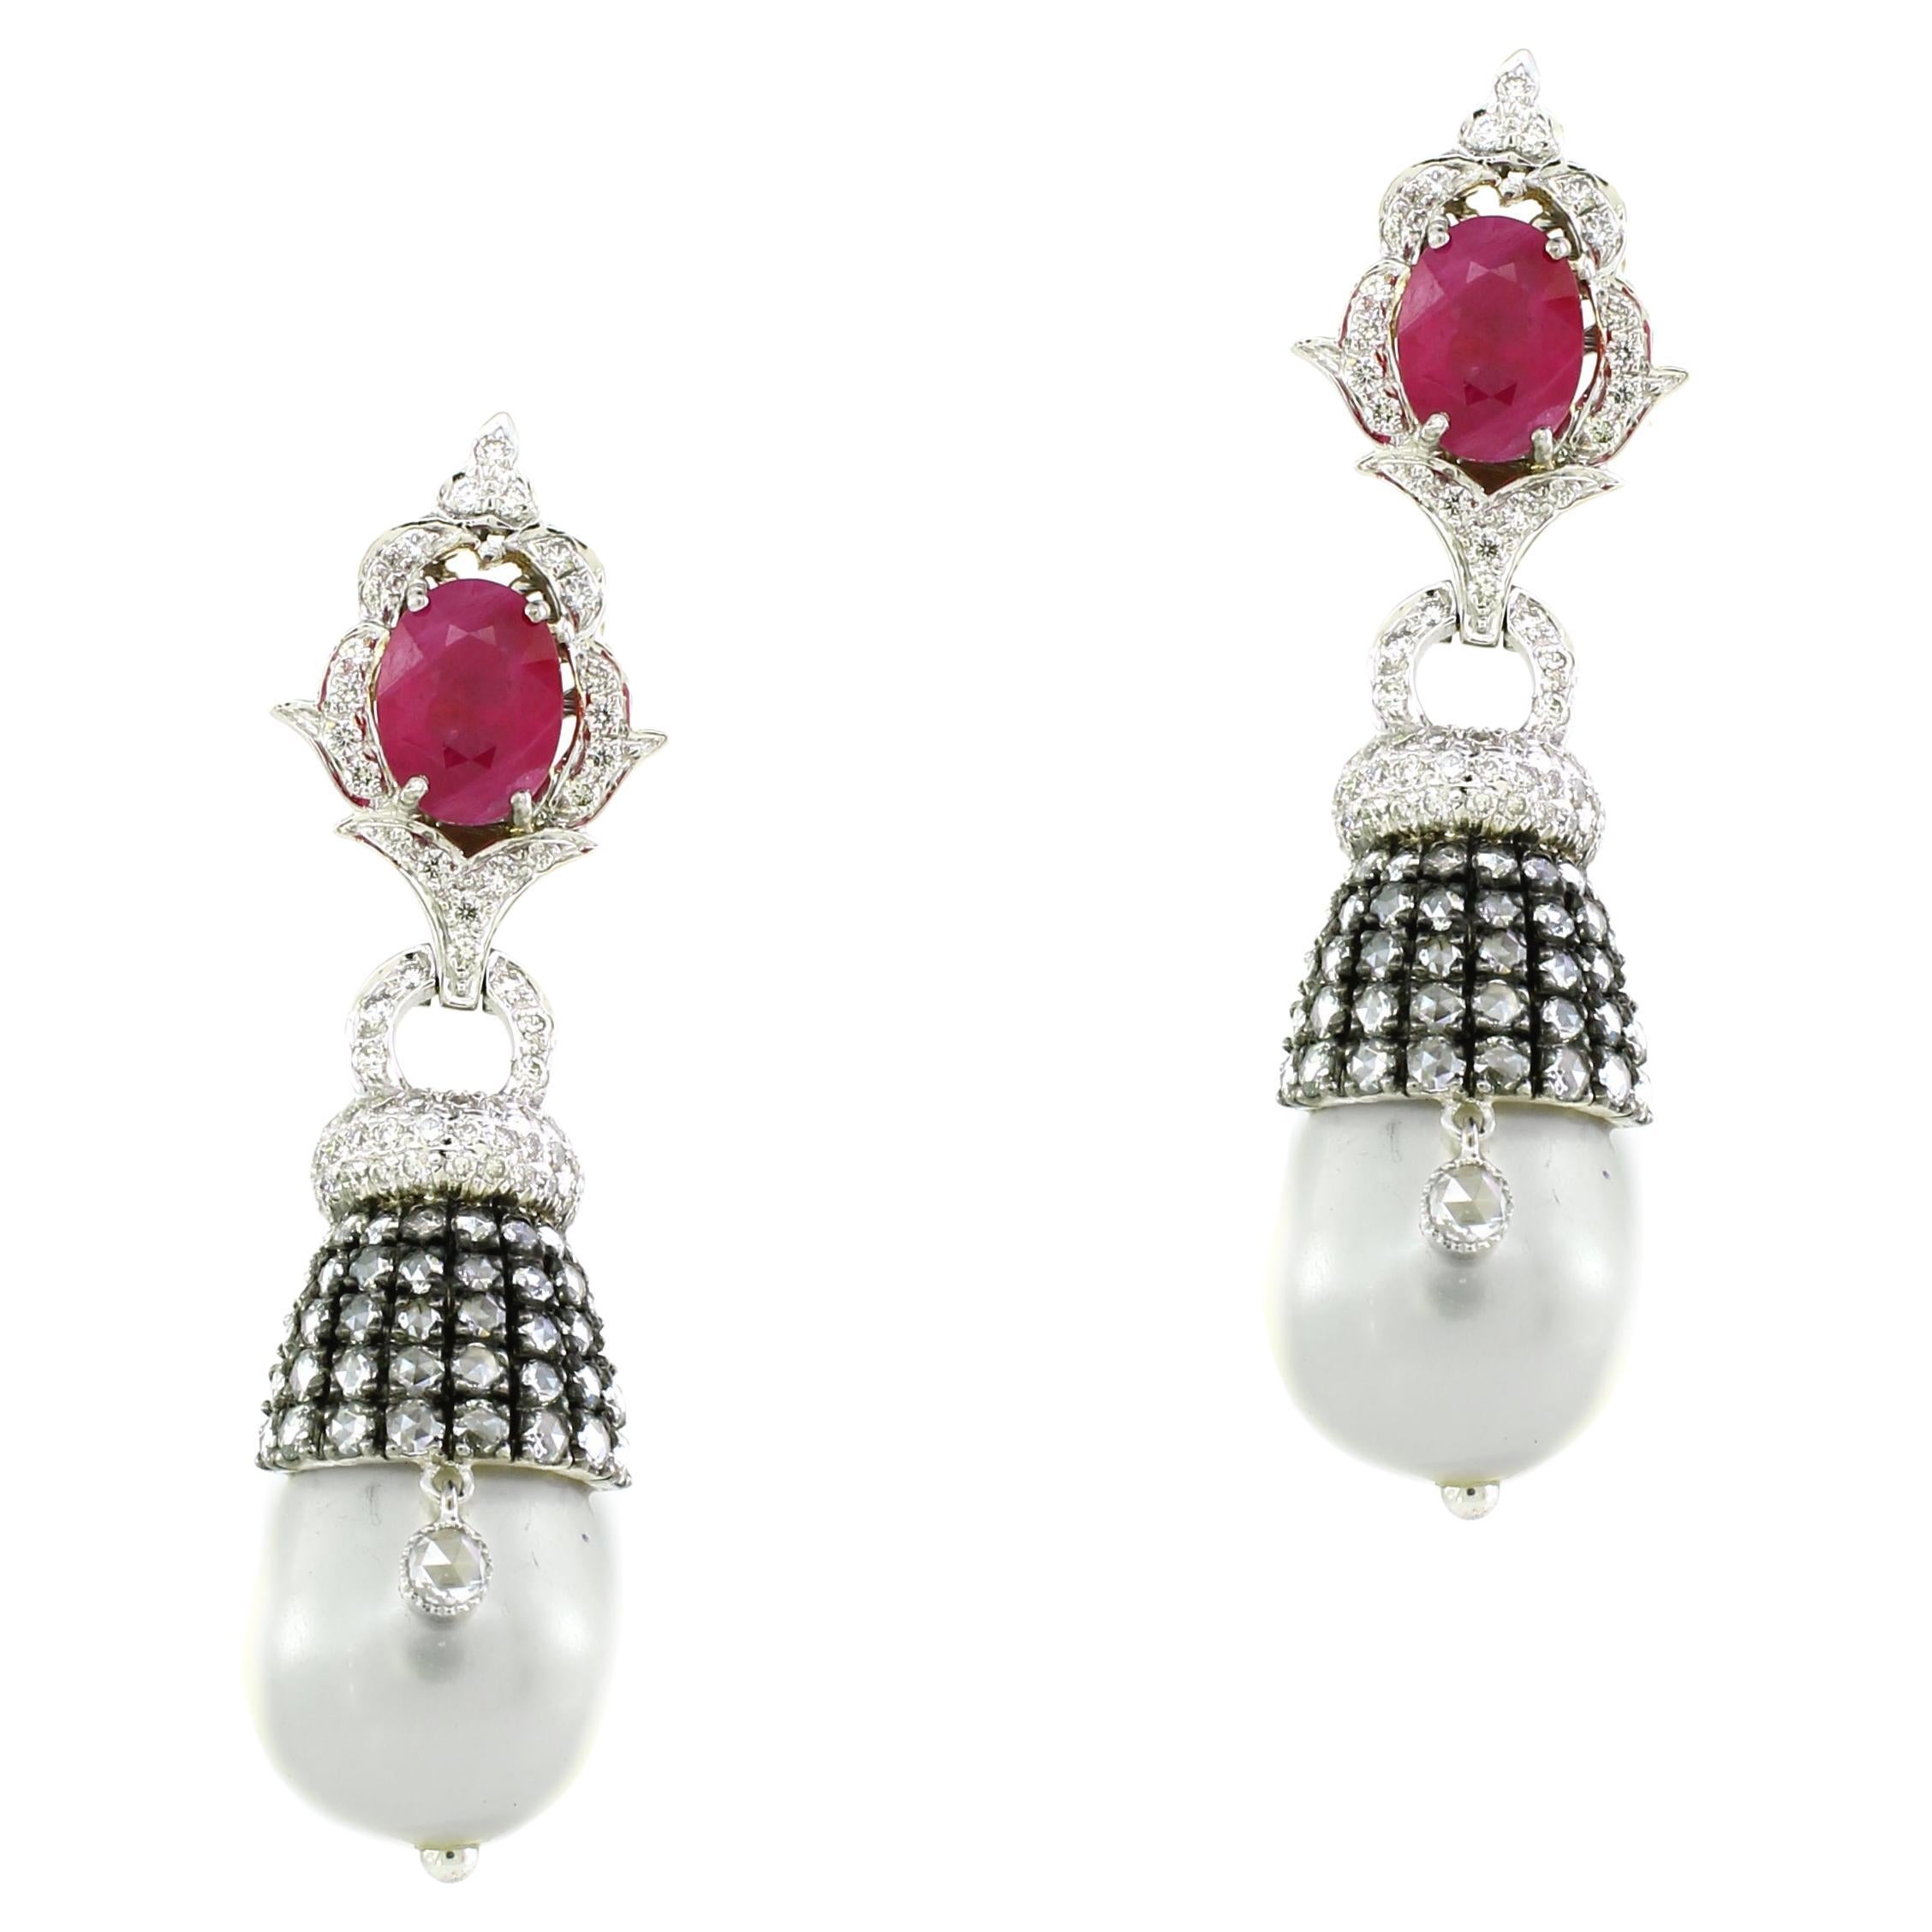 31.26 carats of Pearl Drop Earrings